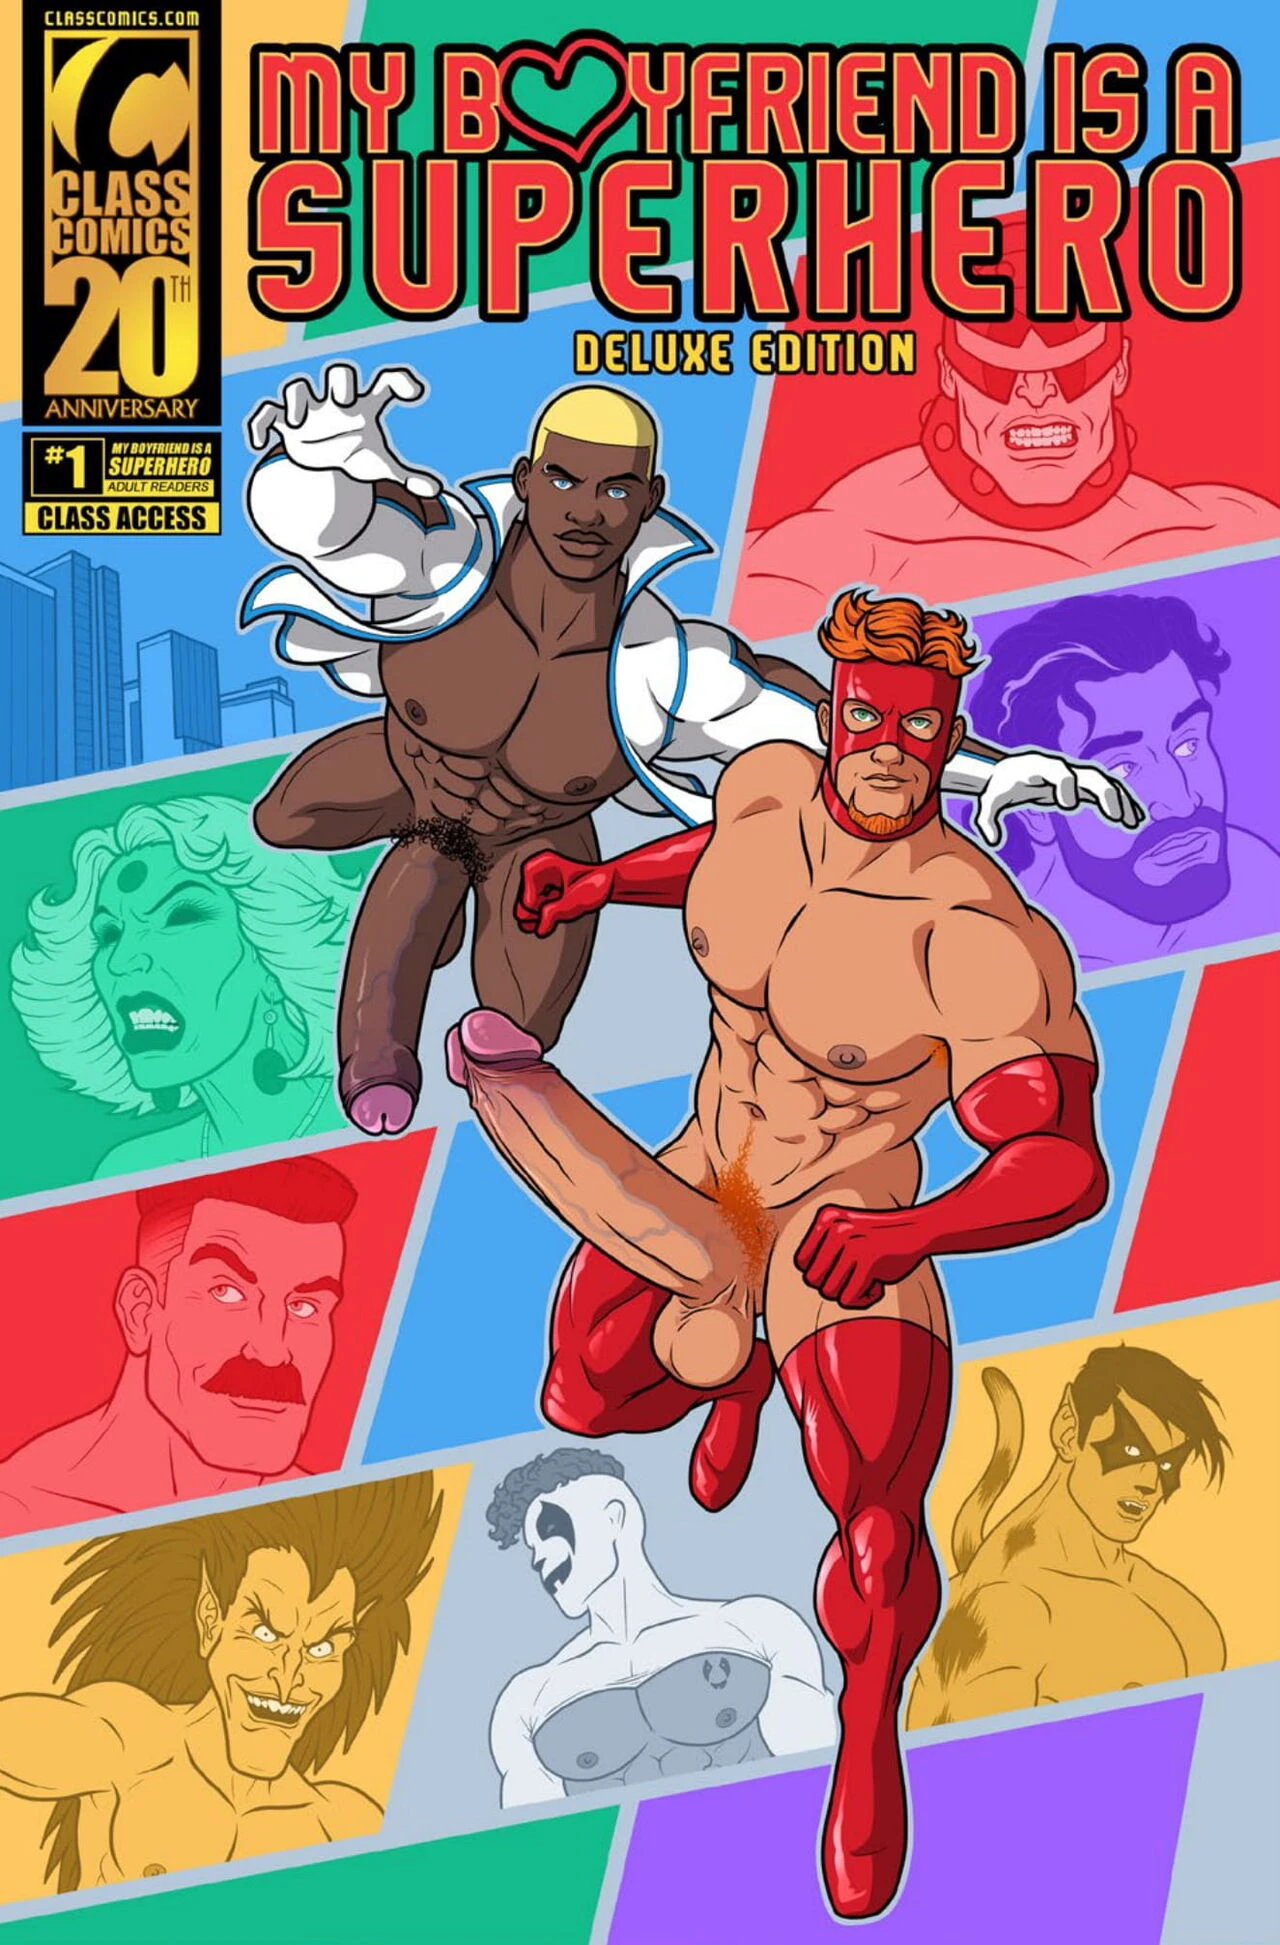 Superhero gay porn comics